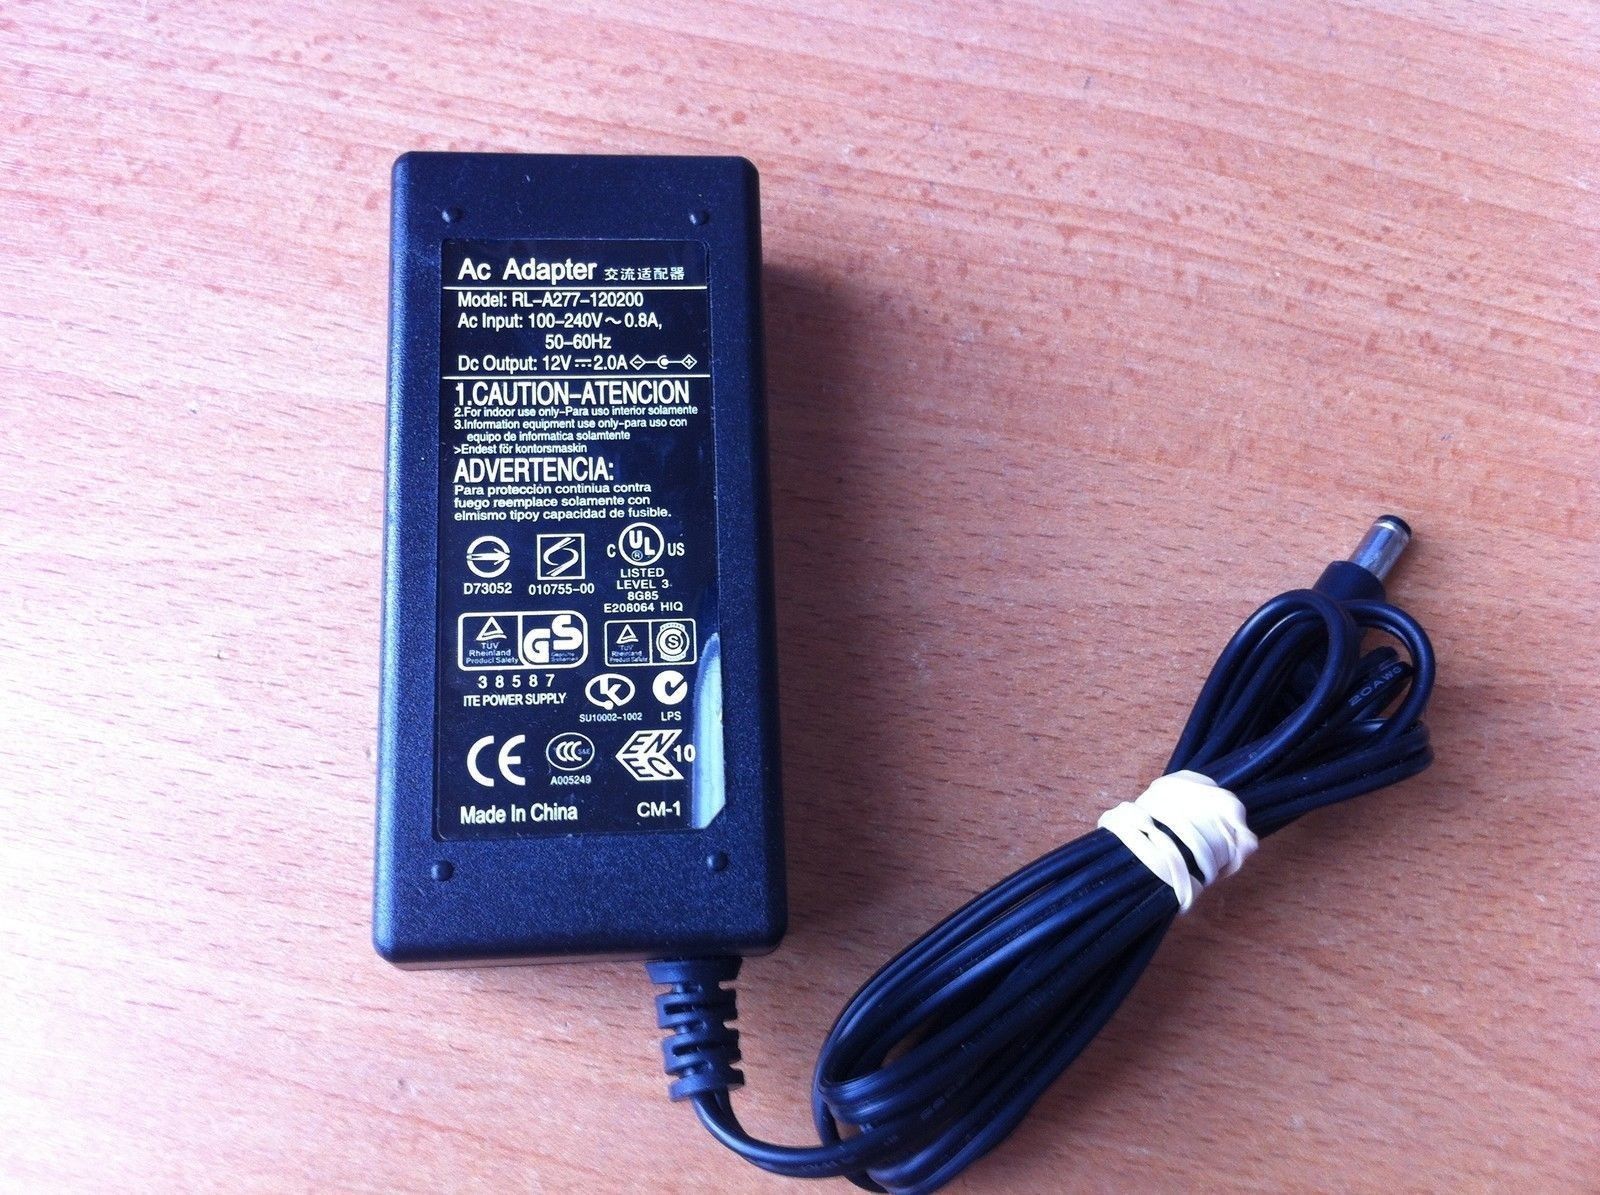 NEW 12V 2A NOTEBOOK RL-A277-120200 Power Supply AC Adapter